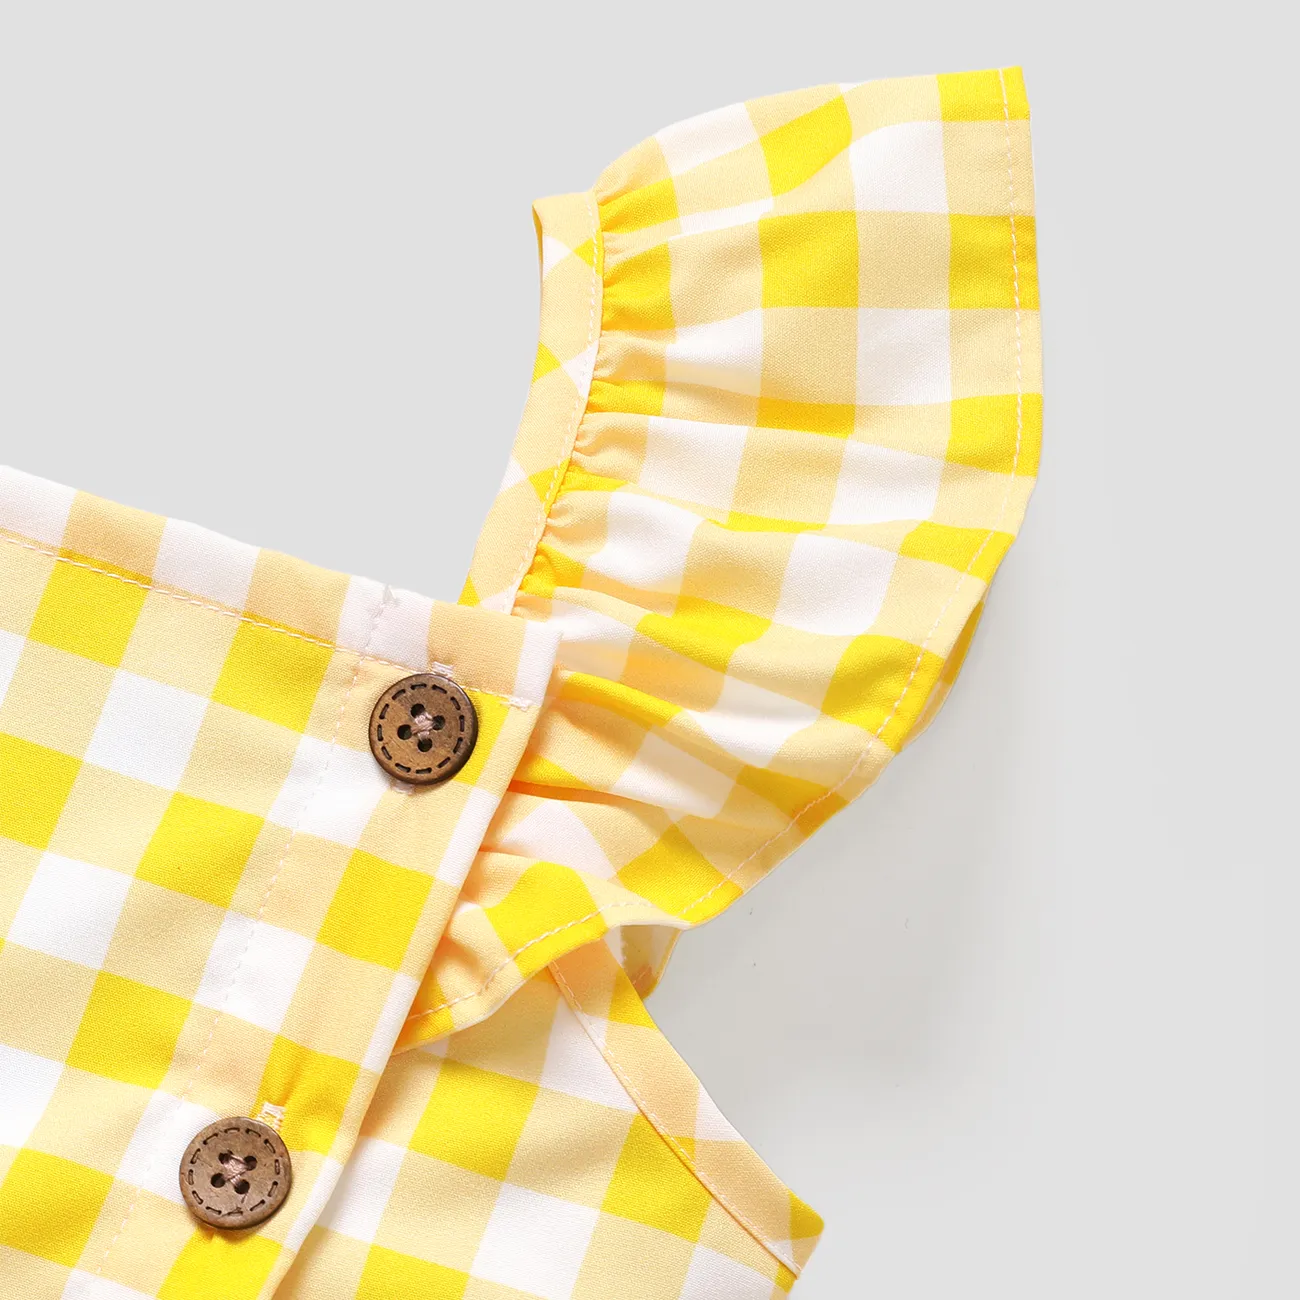 Toddler Girl Button Design Lemon Print/Plaid Flutter-sleeve Dress Yellow big image 1